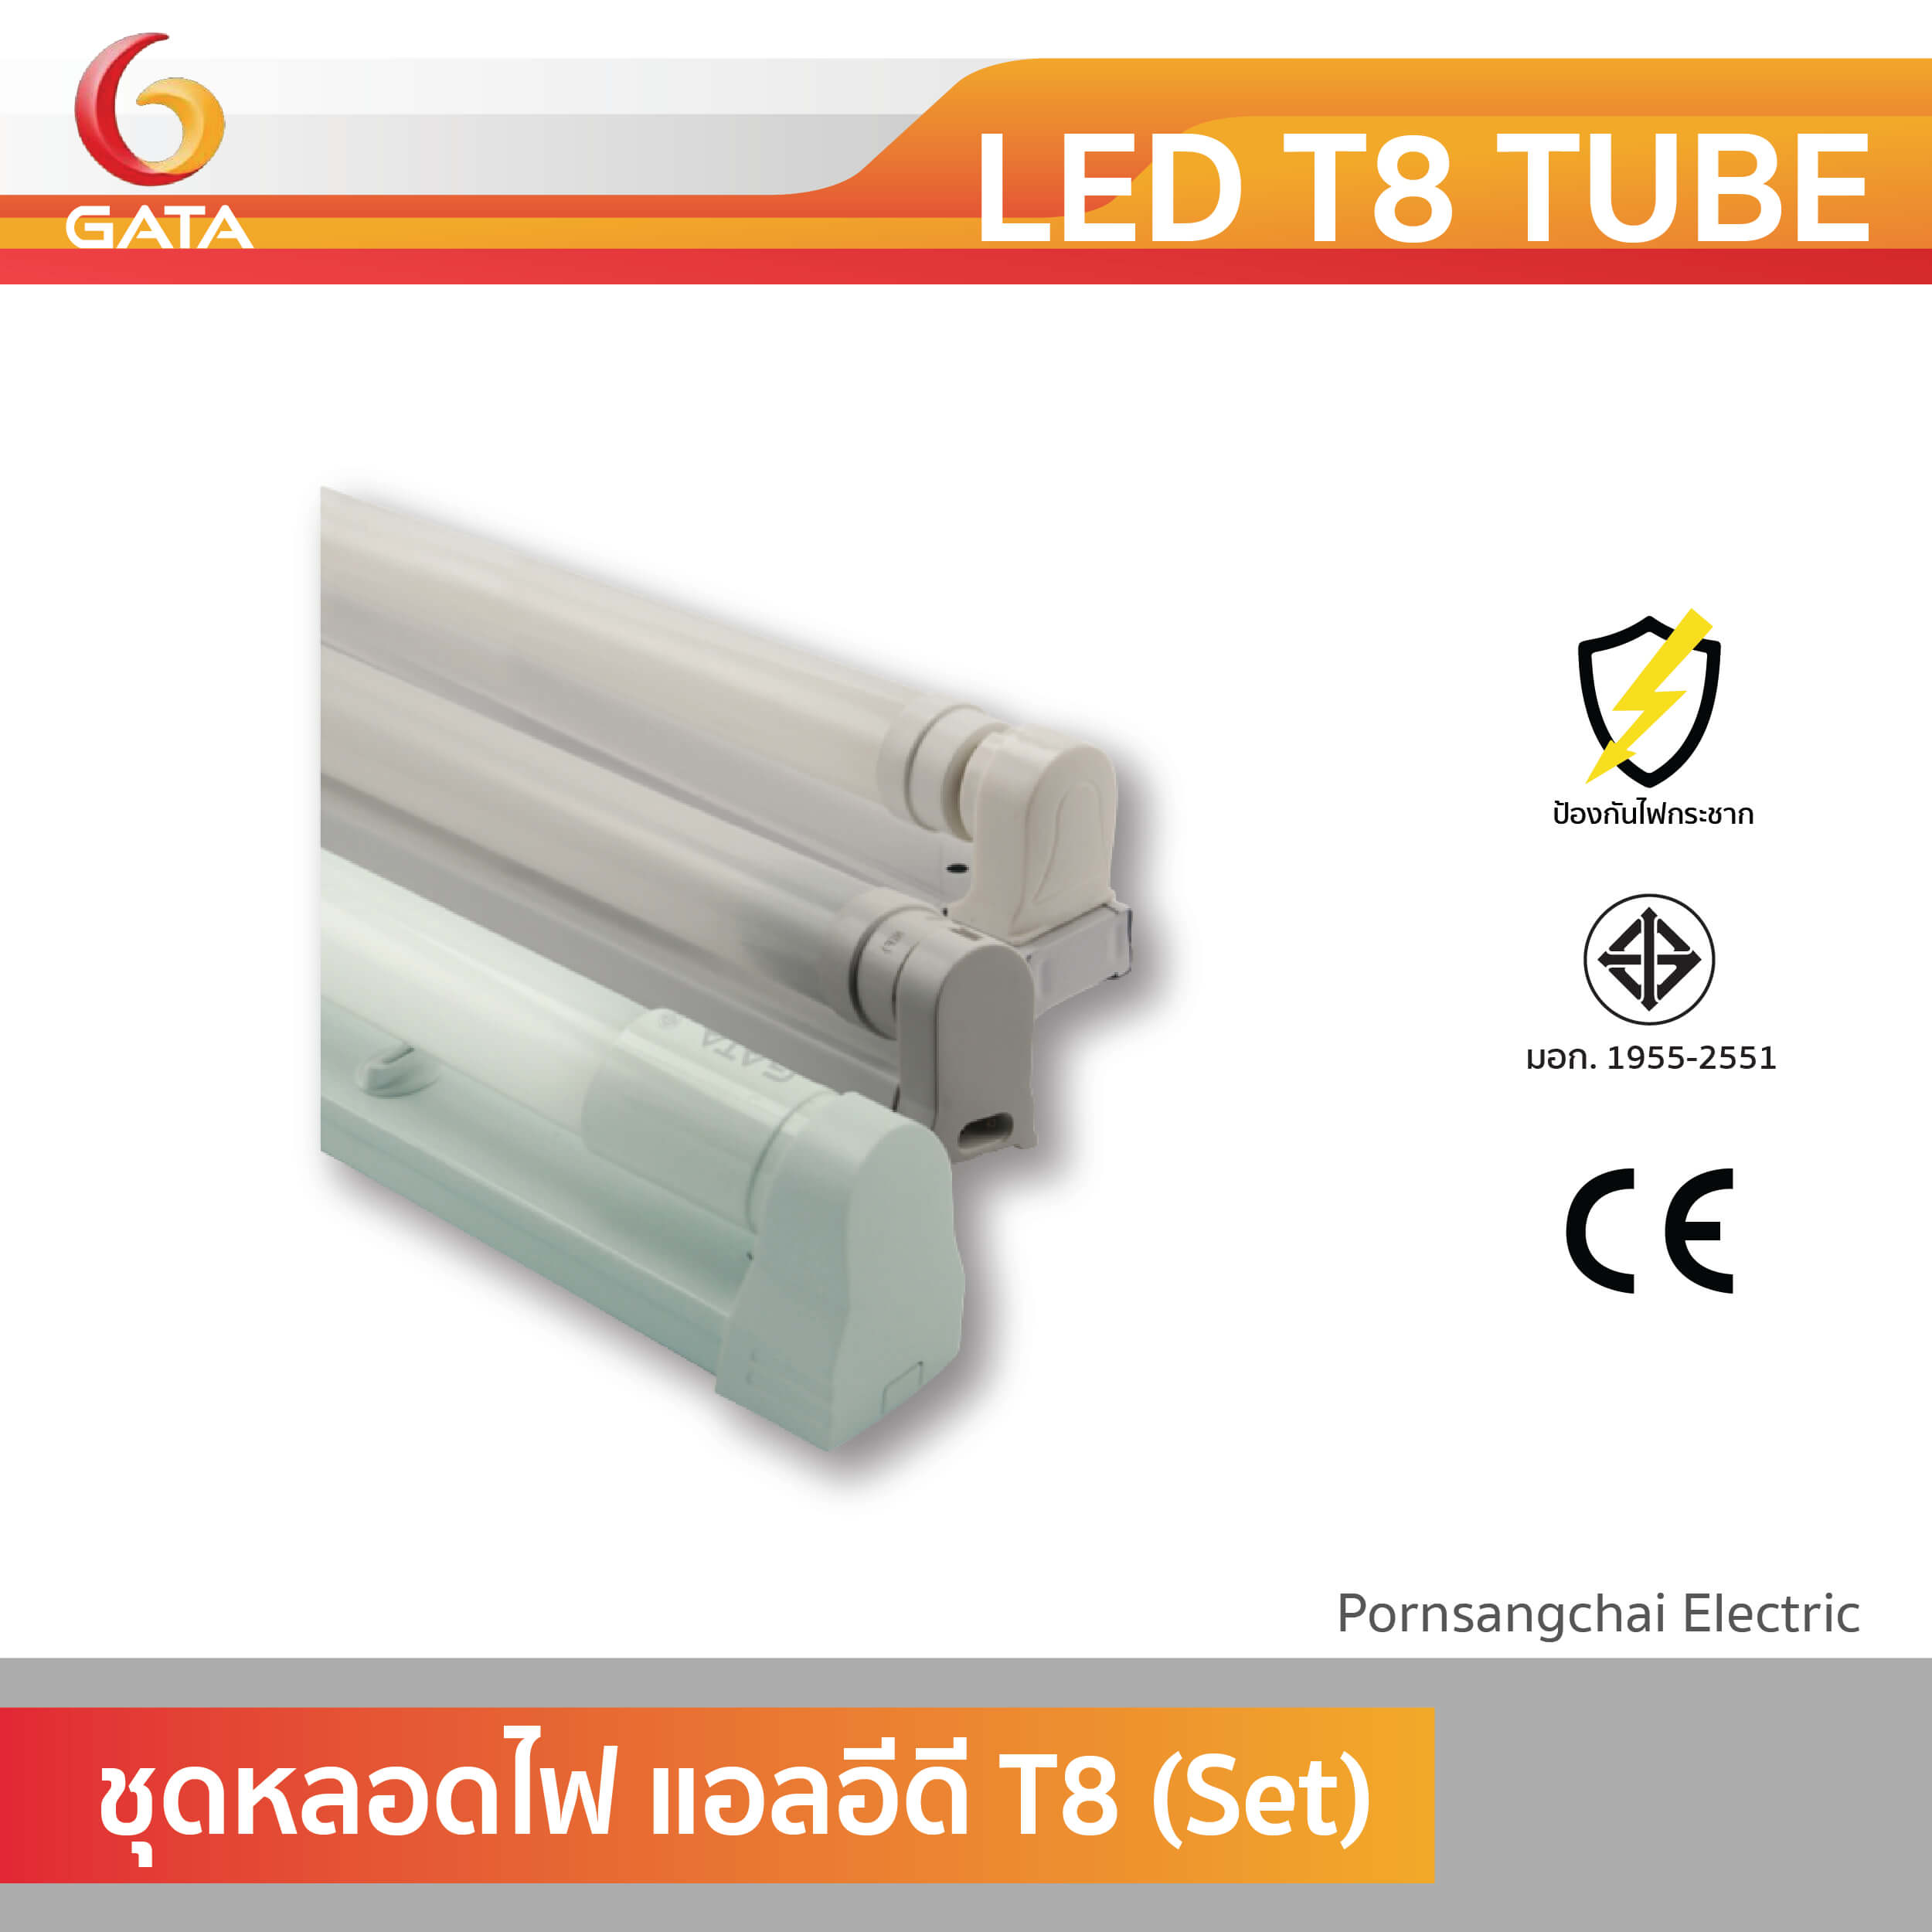 GATA LED T8 TUBE (Set)